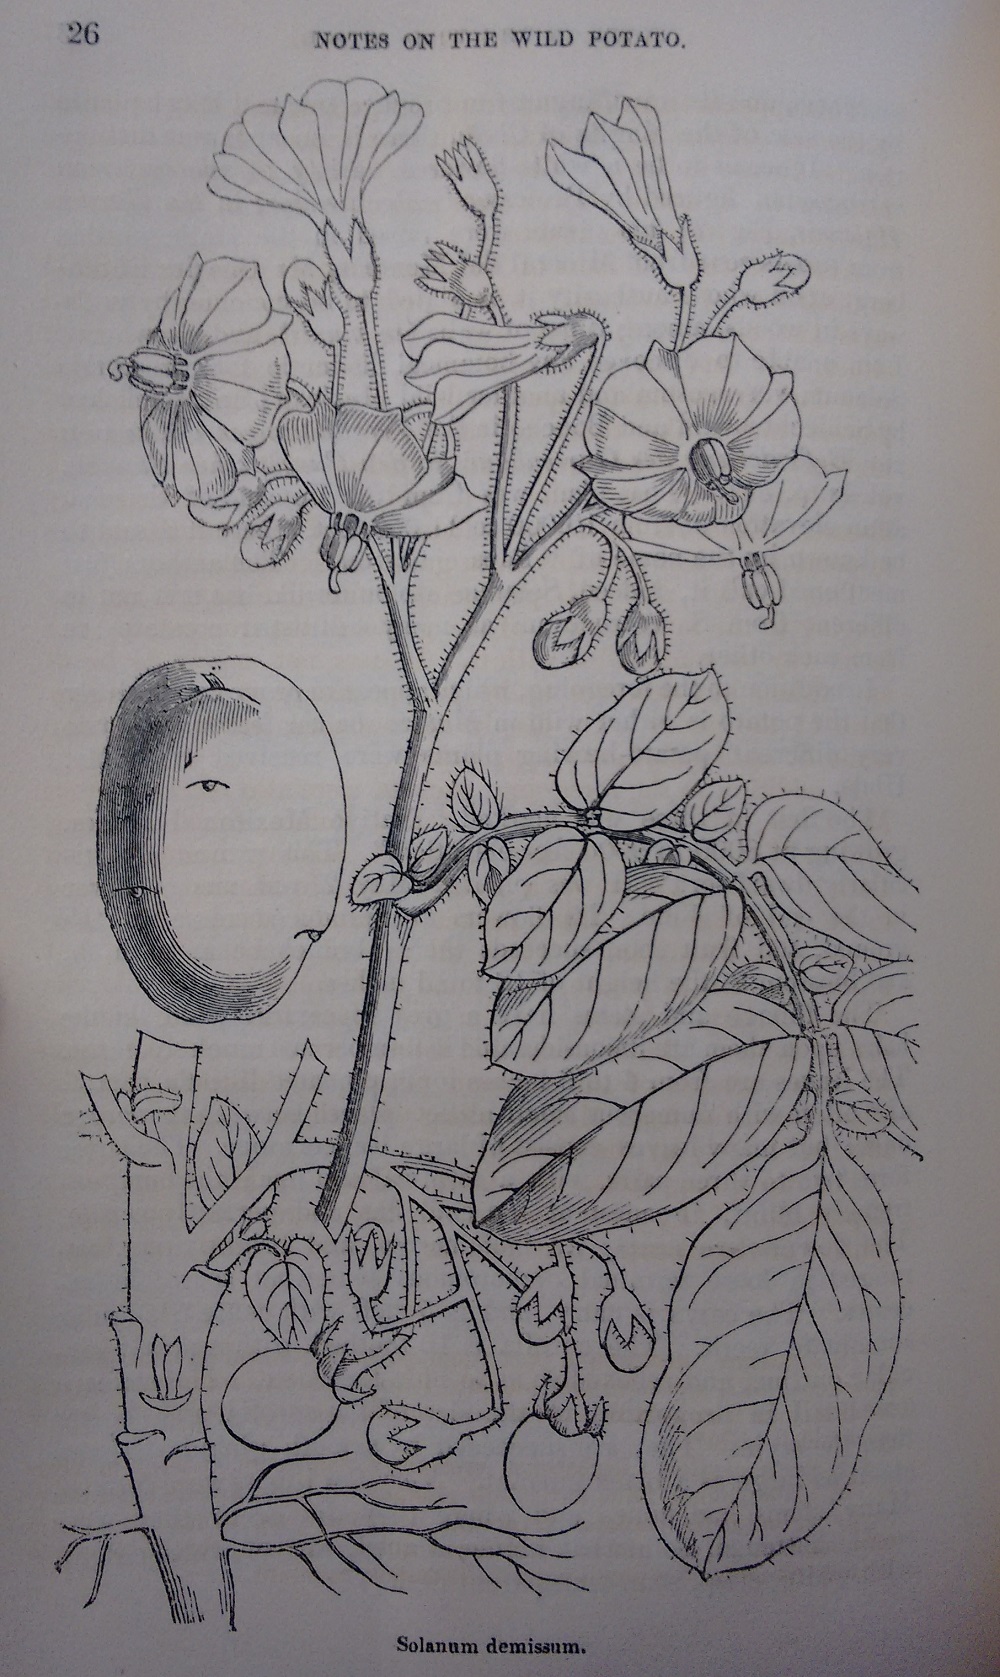 Line drawing of a wild potaot plant, 19th century